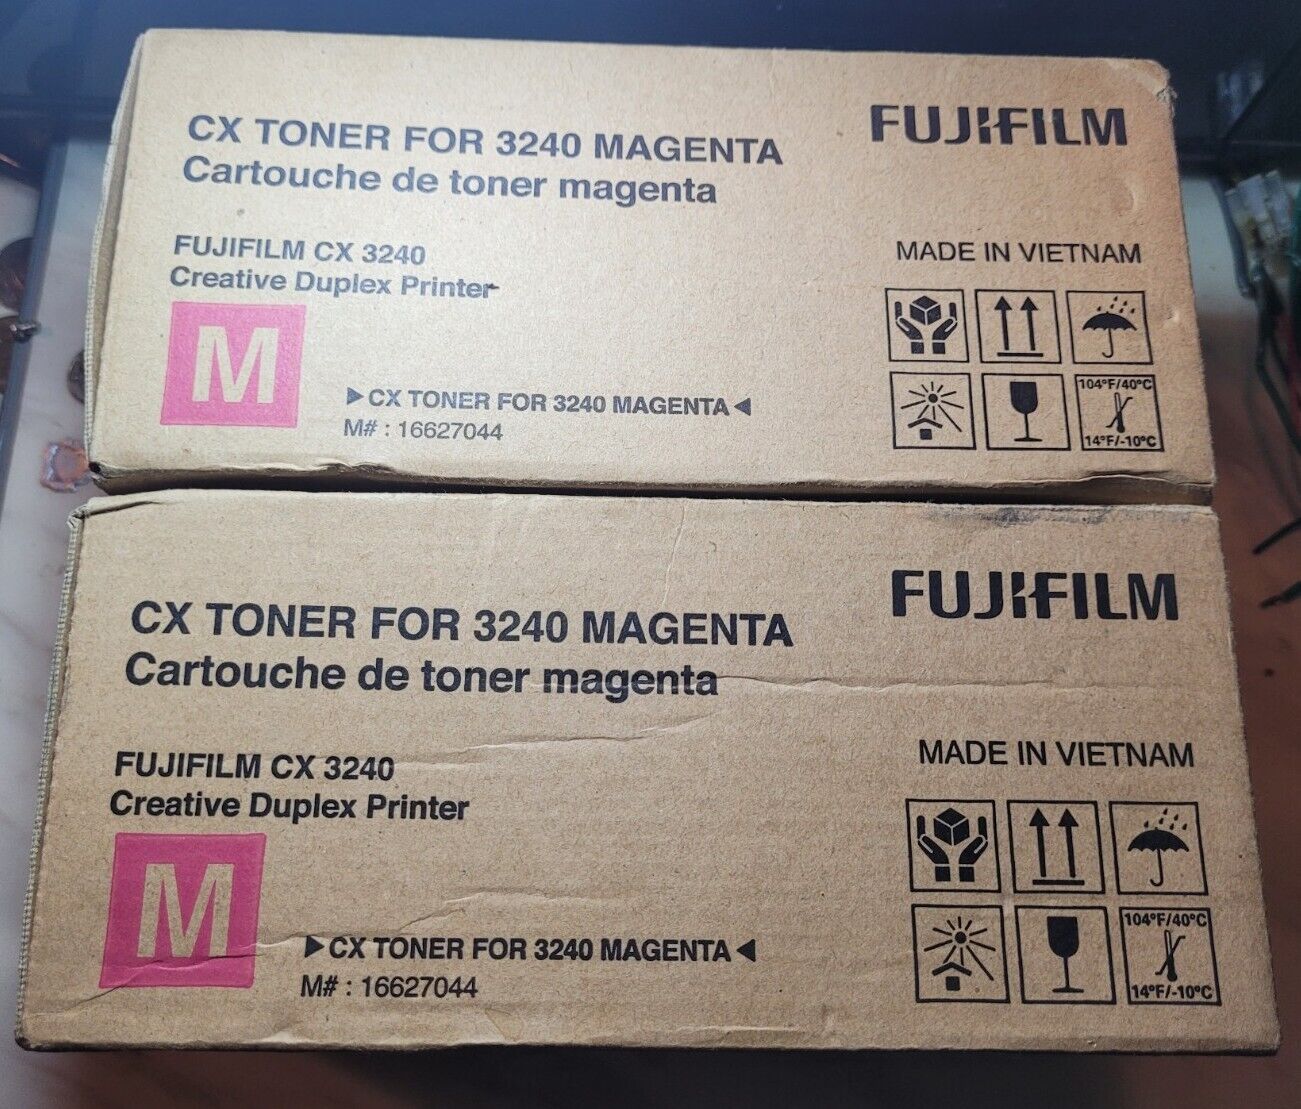 Fujifilm CX Toner For 3240 Model CT203196 Fuji Film Magenta